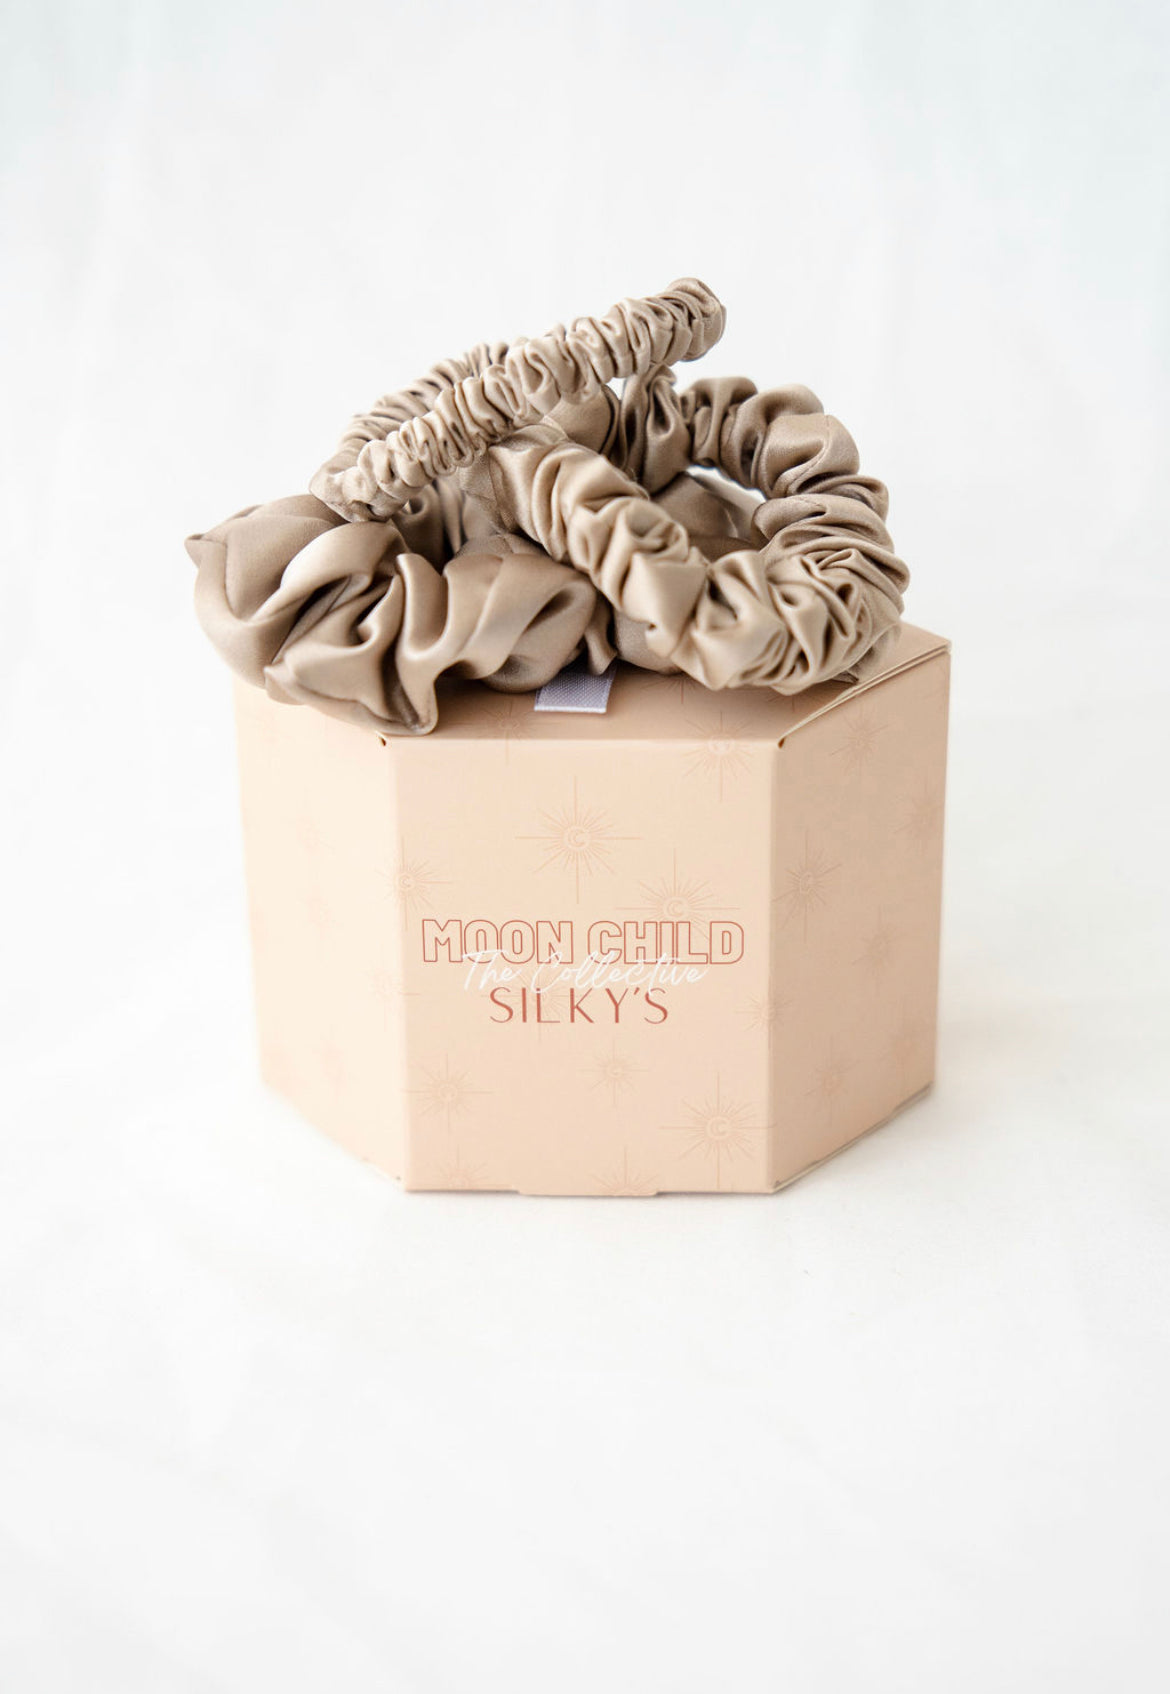 Bundle of 10 silk scrunchies